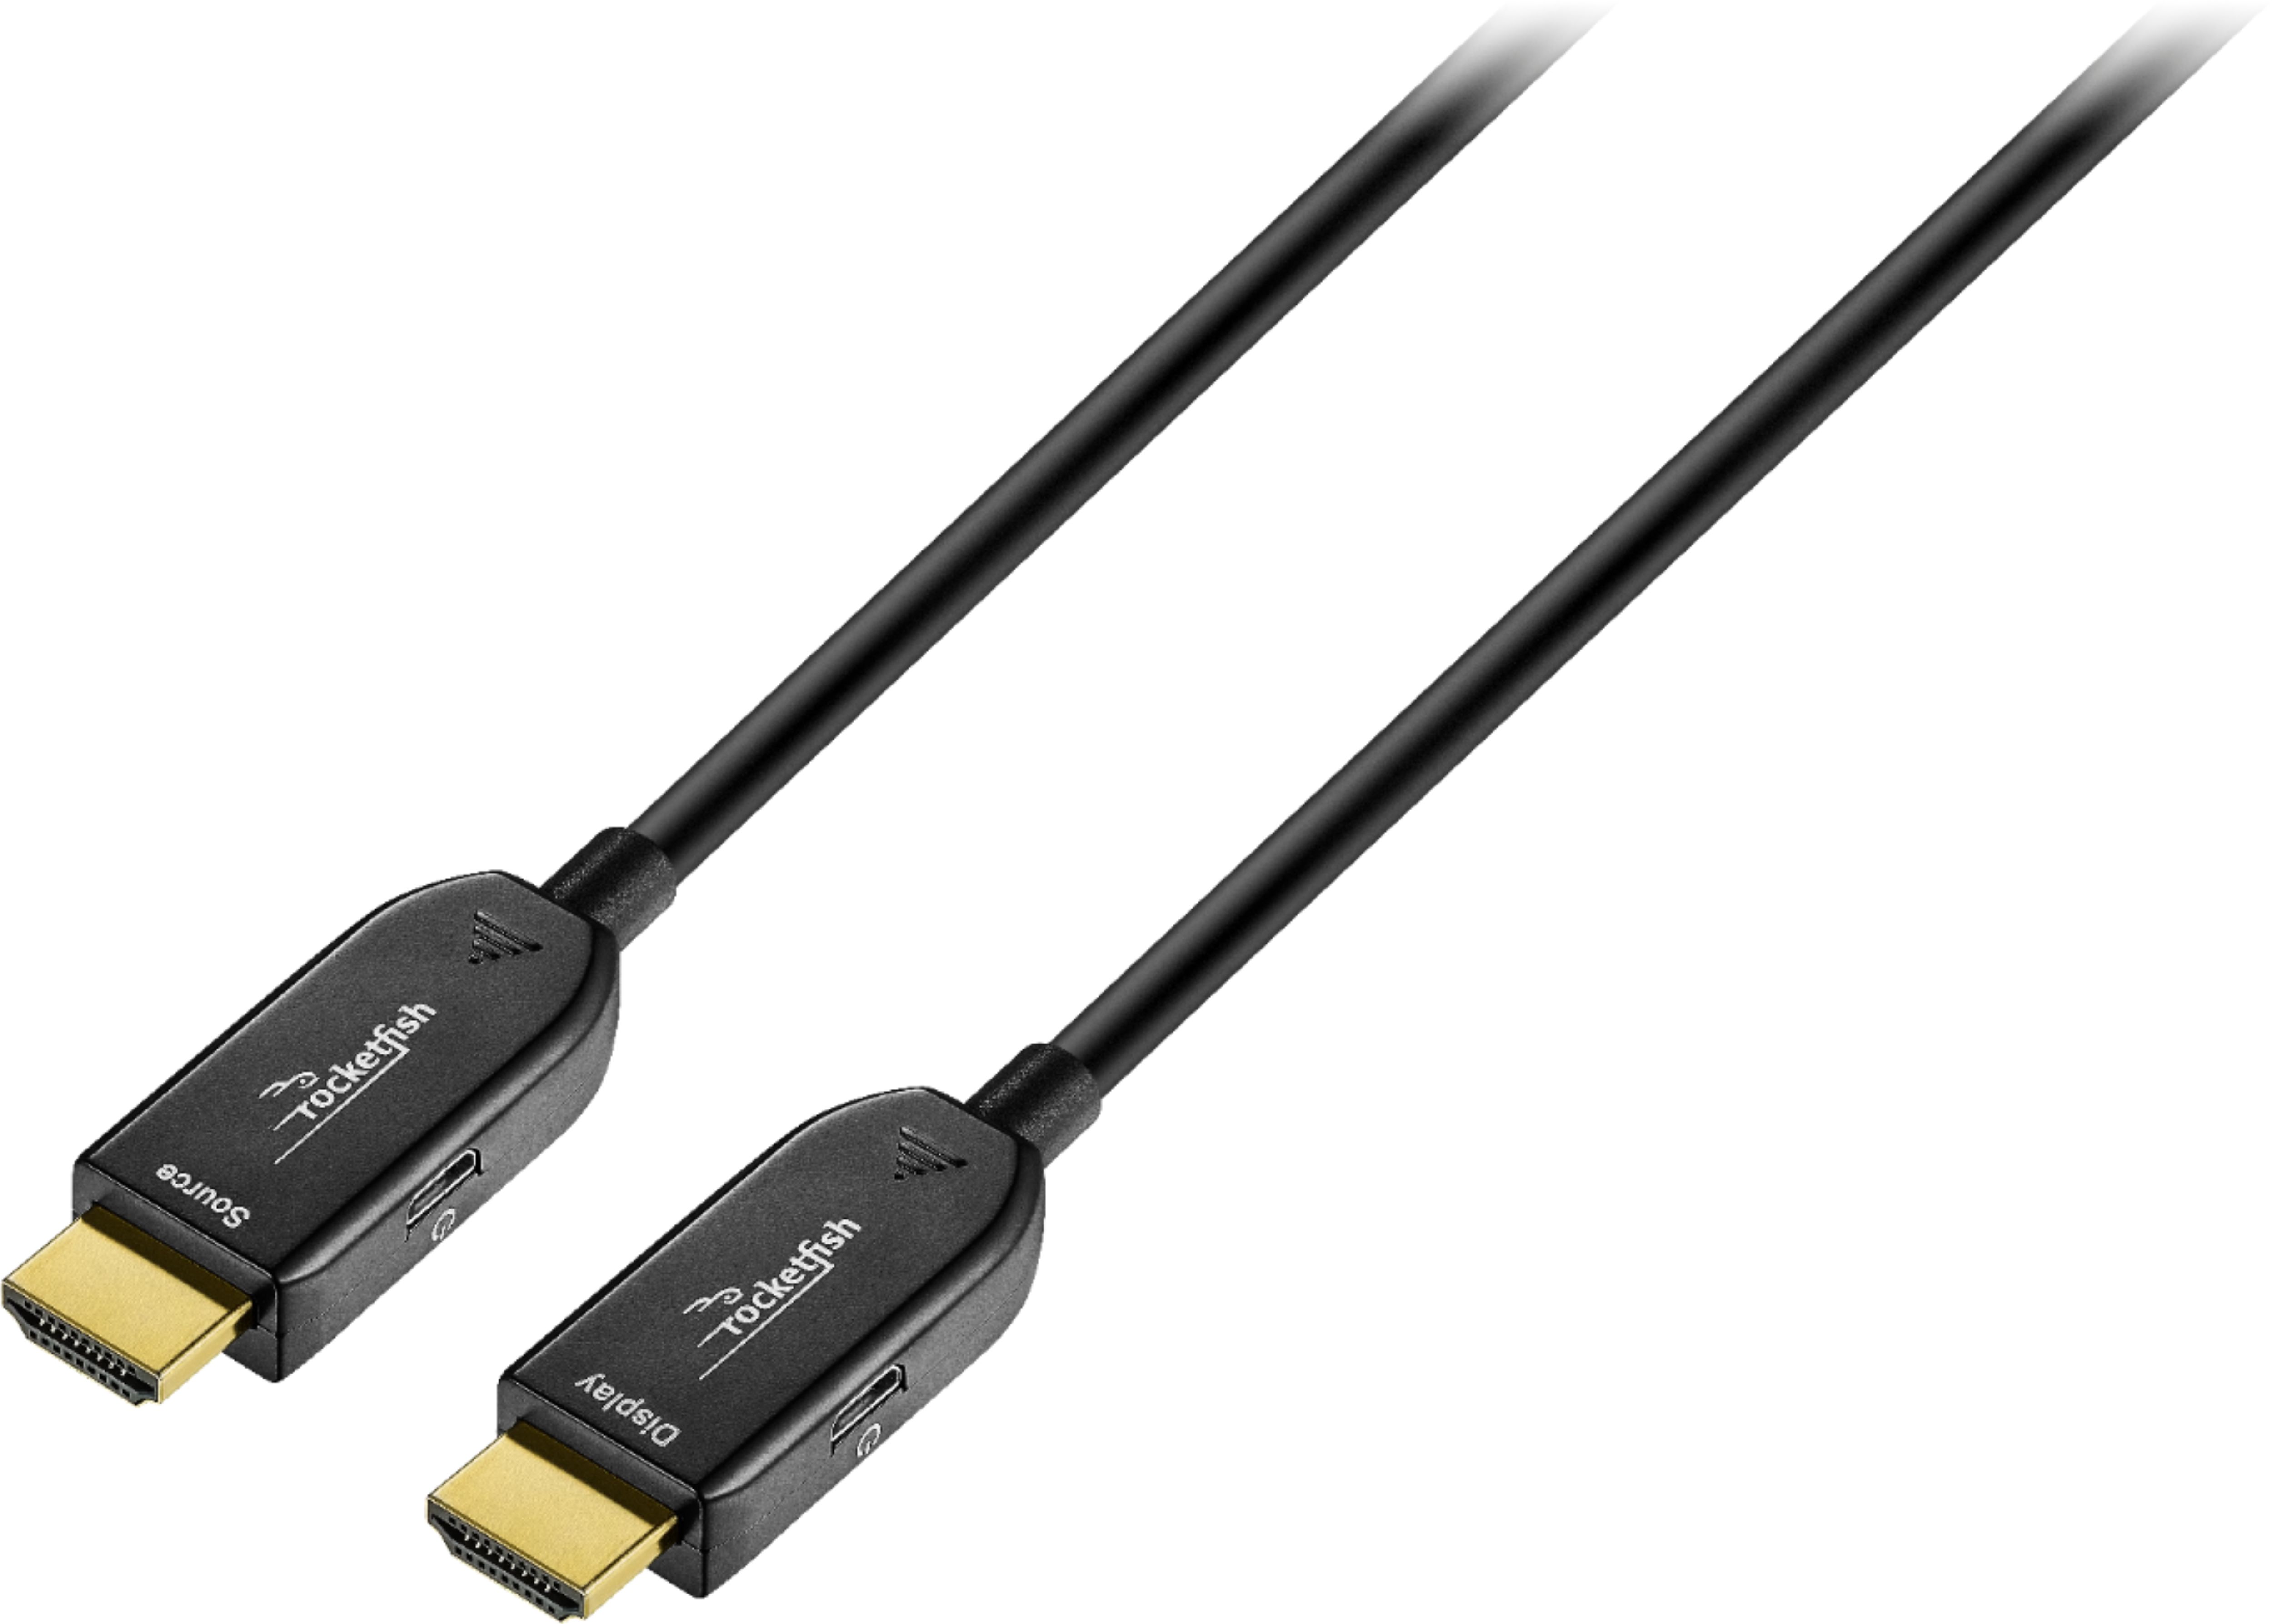 Cable HDMI - USB NP-HD806 - Adaptadores, Cables, Novedades, USB, Video  Pacifico Shop